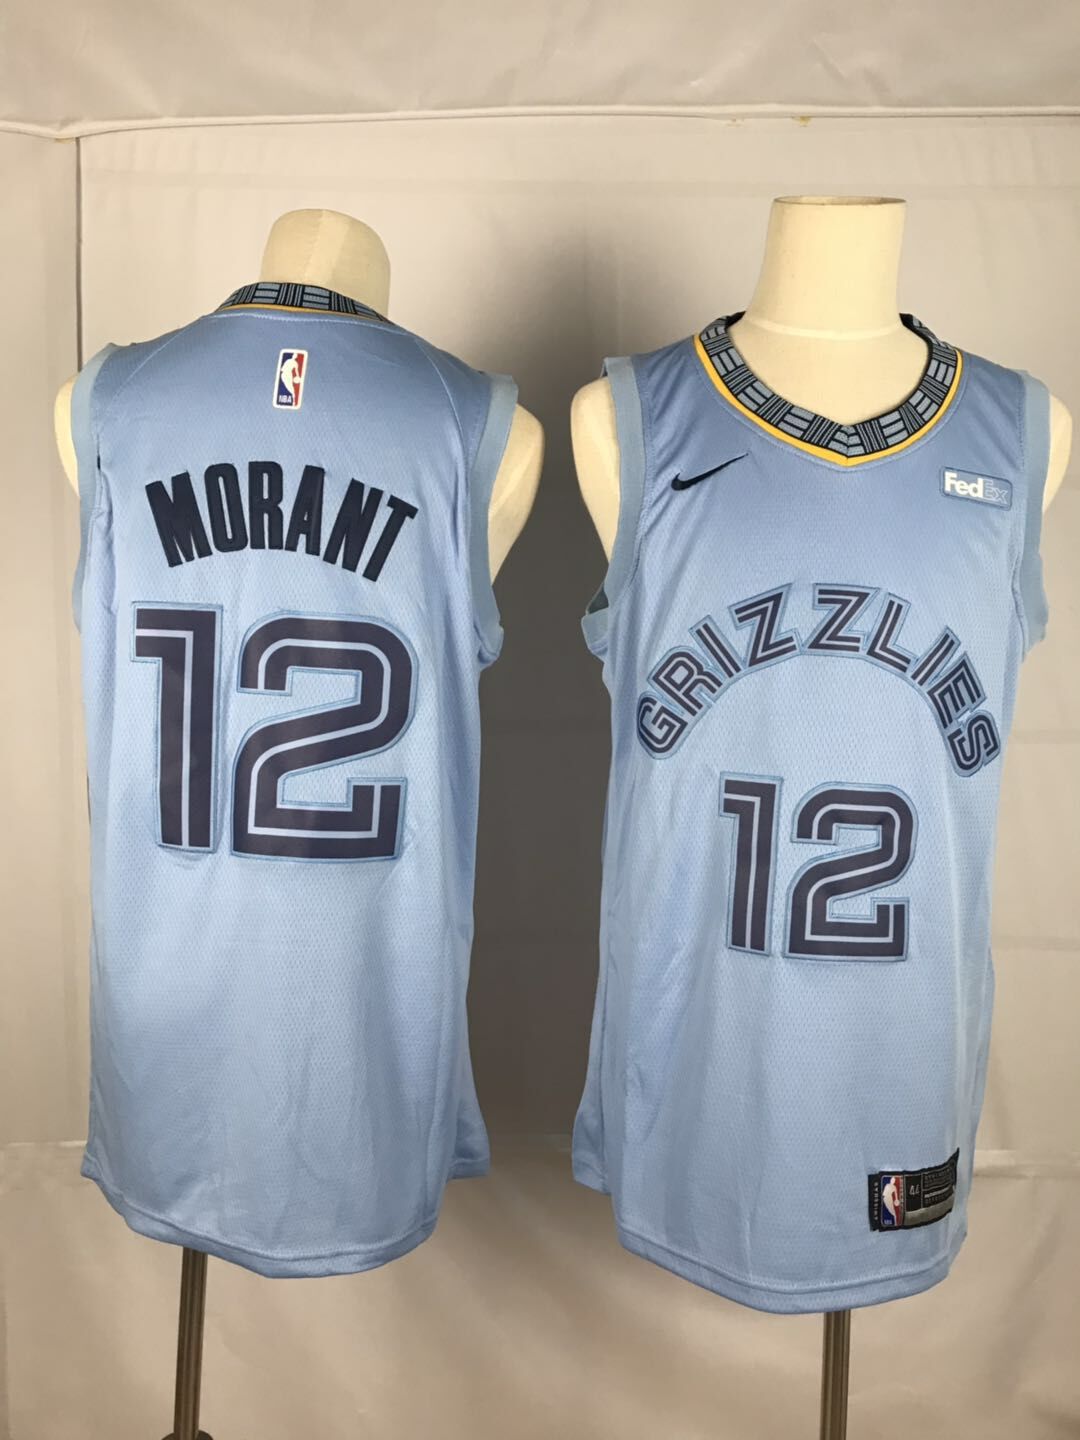 Men Memphis Grizzlies #12 Morant Light Blue Nike NBA Jerseys